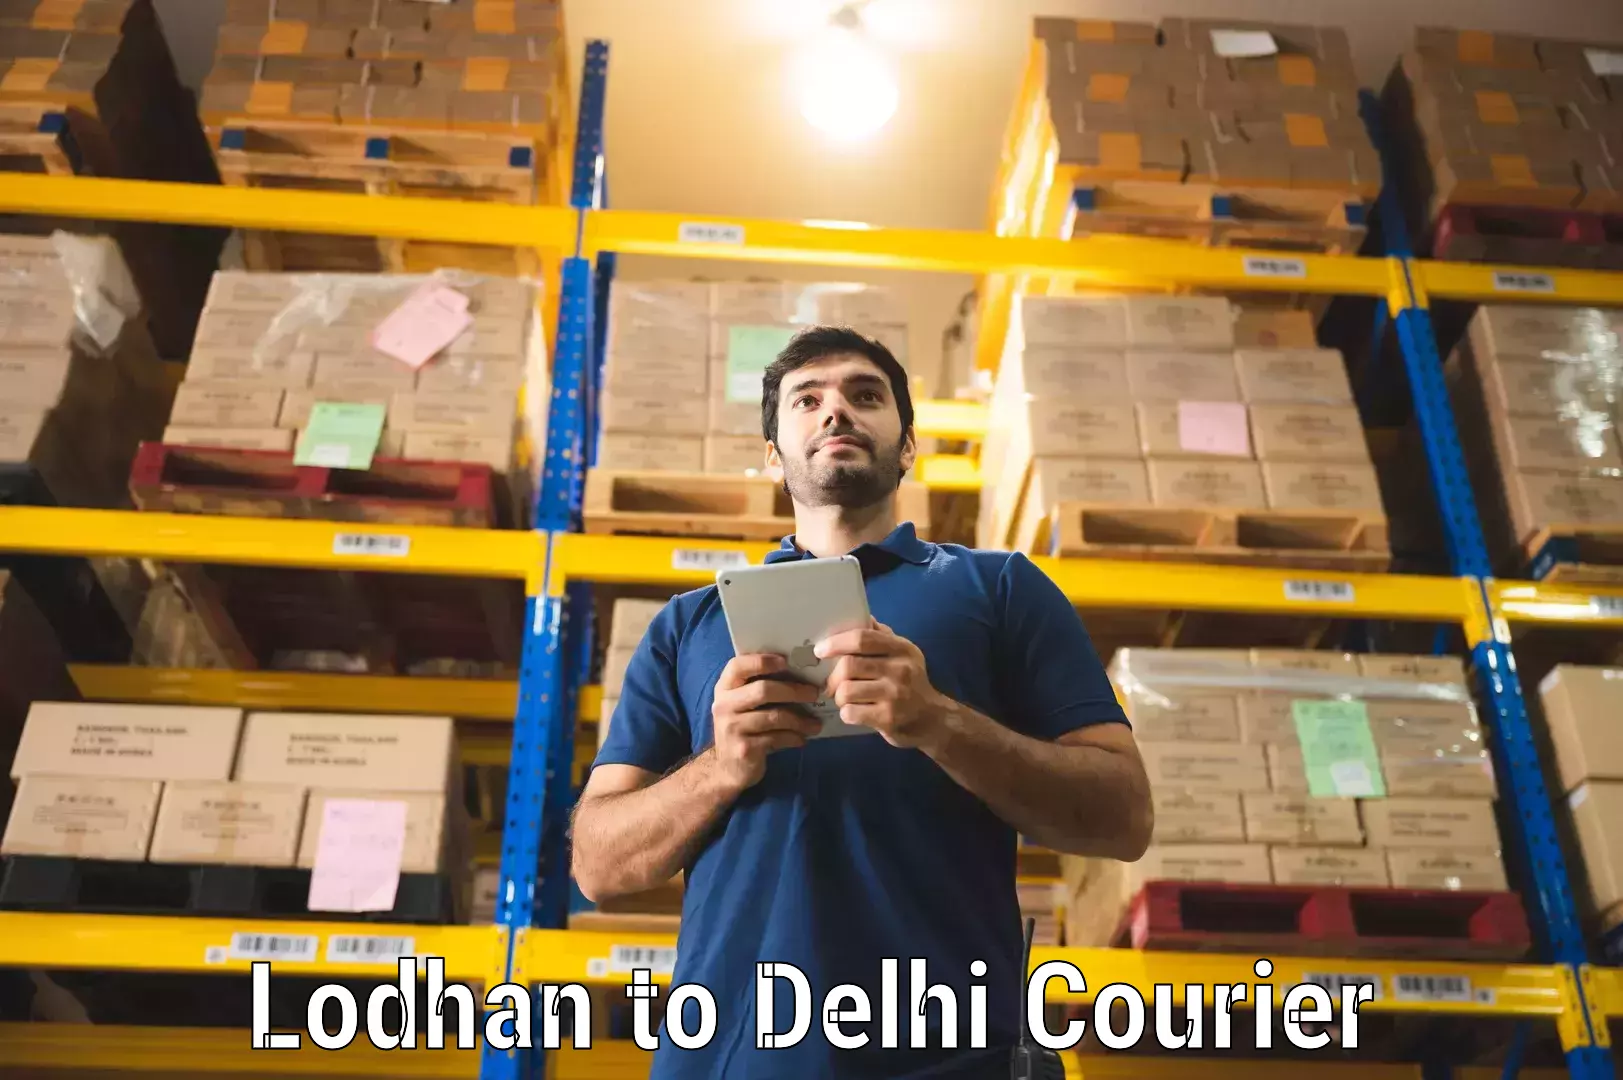 Efficient order fulfillment Lodhan to Delhi